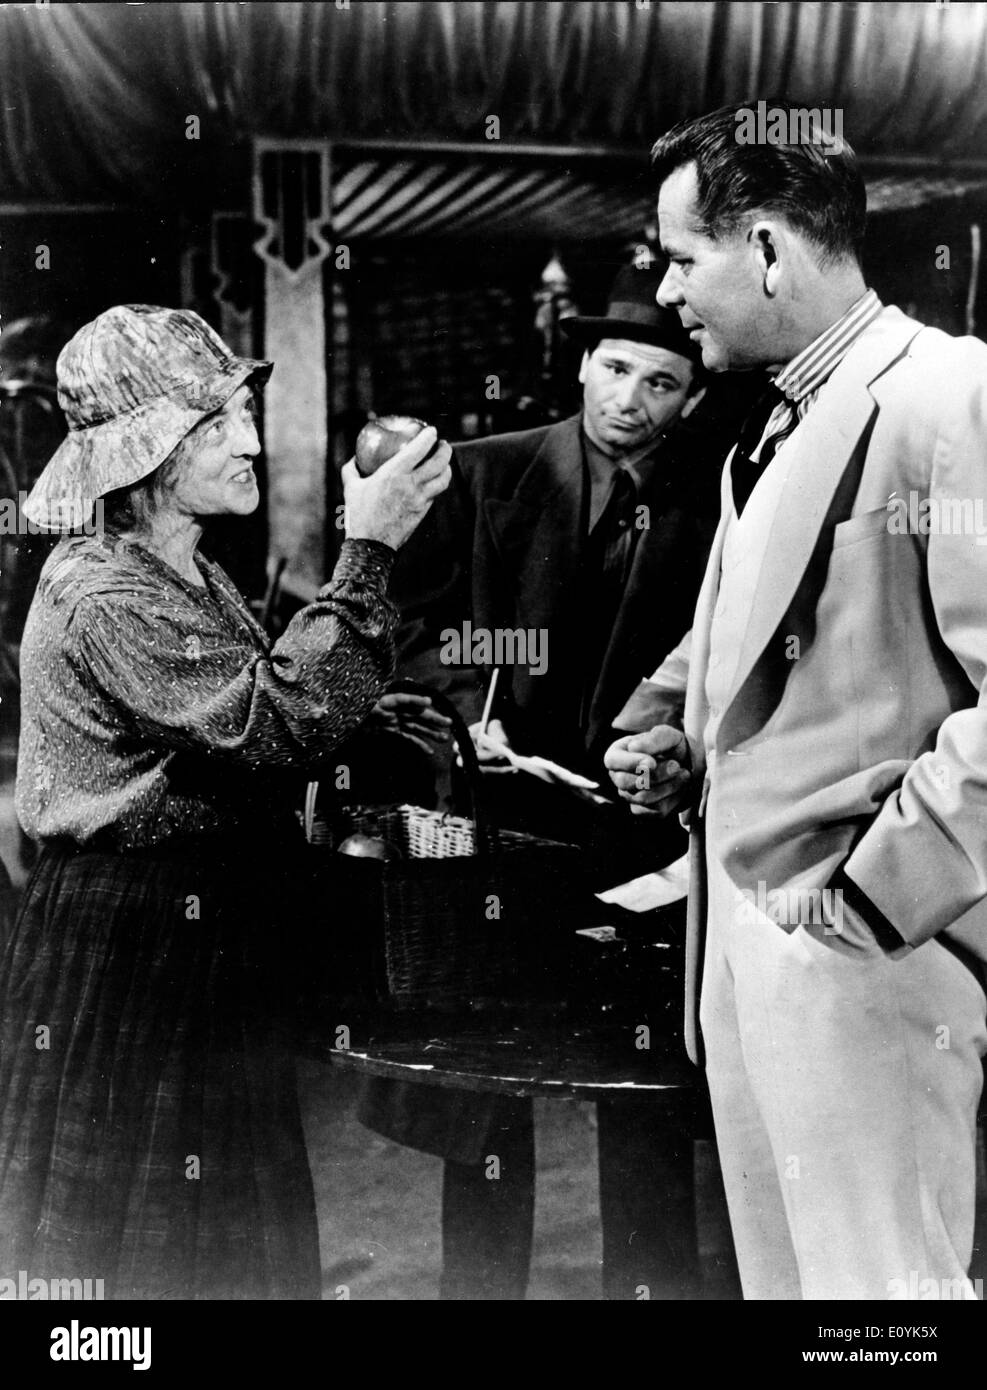 Actors Bette Davis and Glenn Ford in film Stock Photo